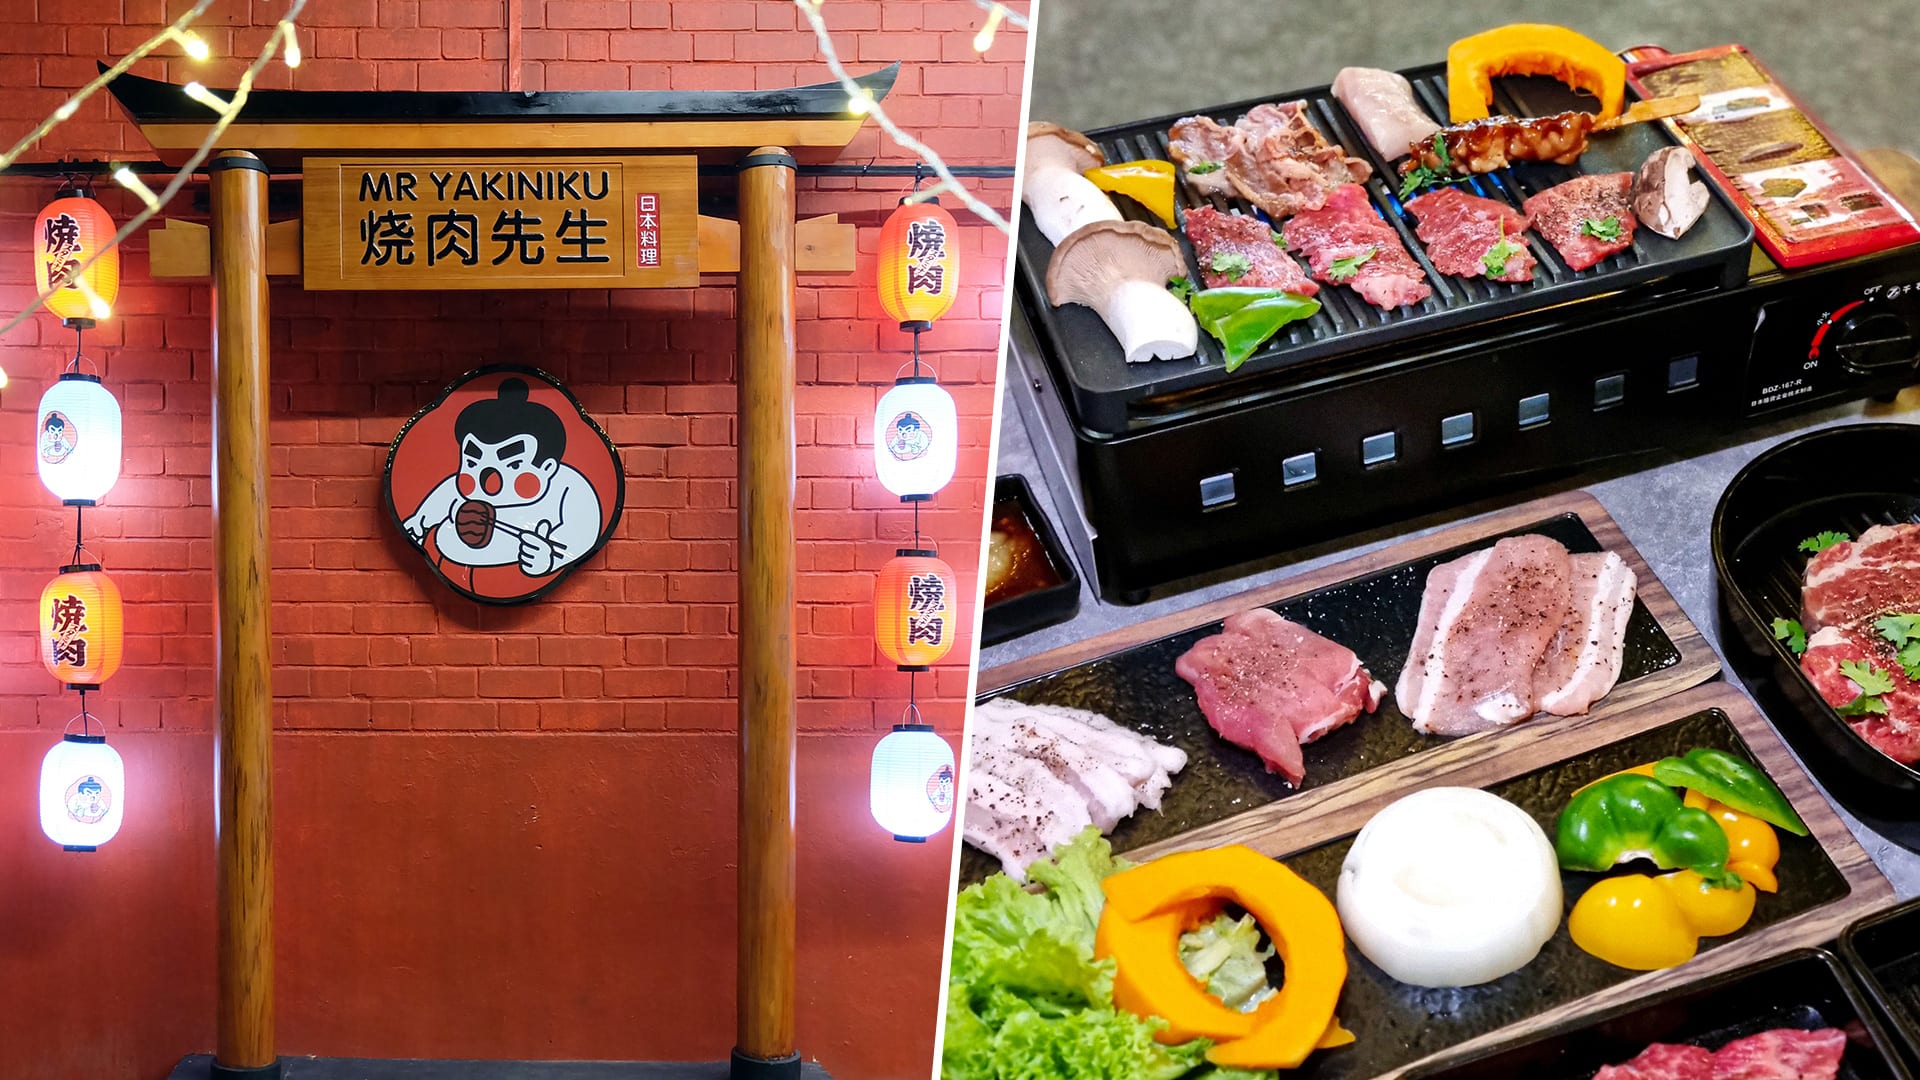 Yakiniku Hawker Stall In Ubi Has IG-Friendly Corner With Shinto Shrine Gateway Replica